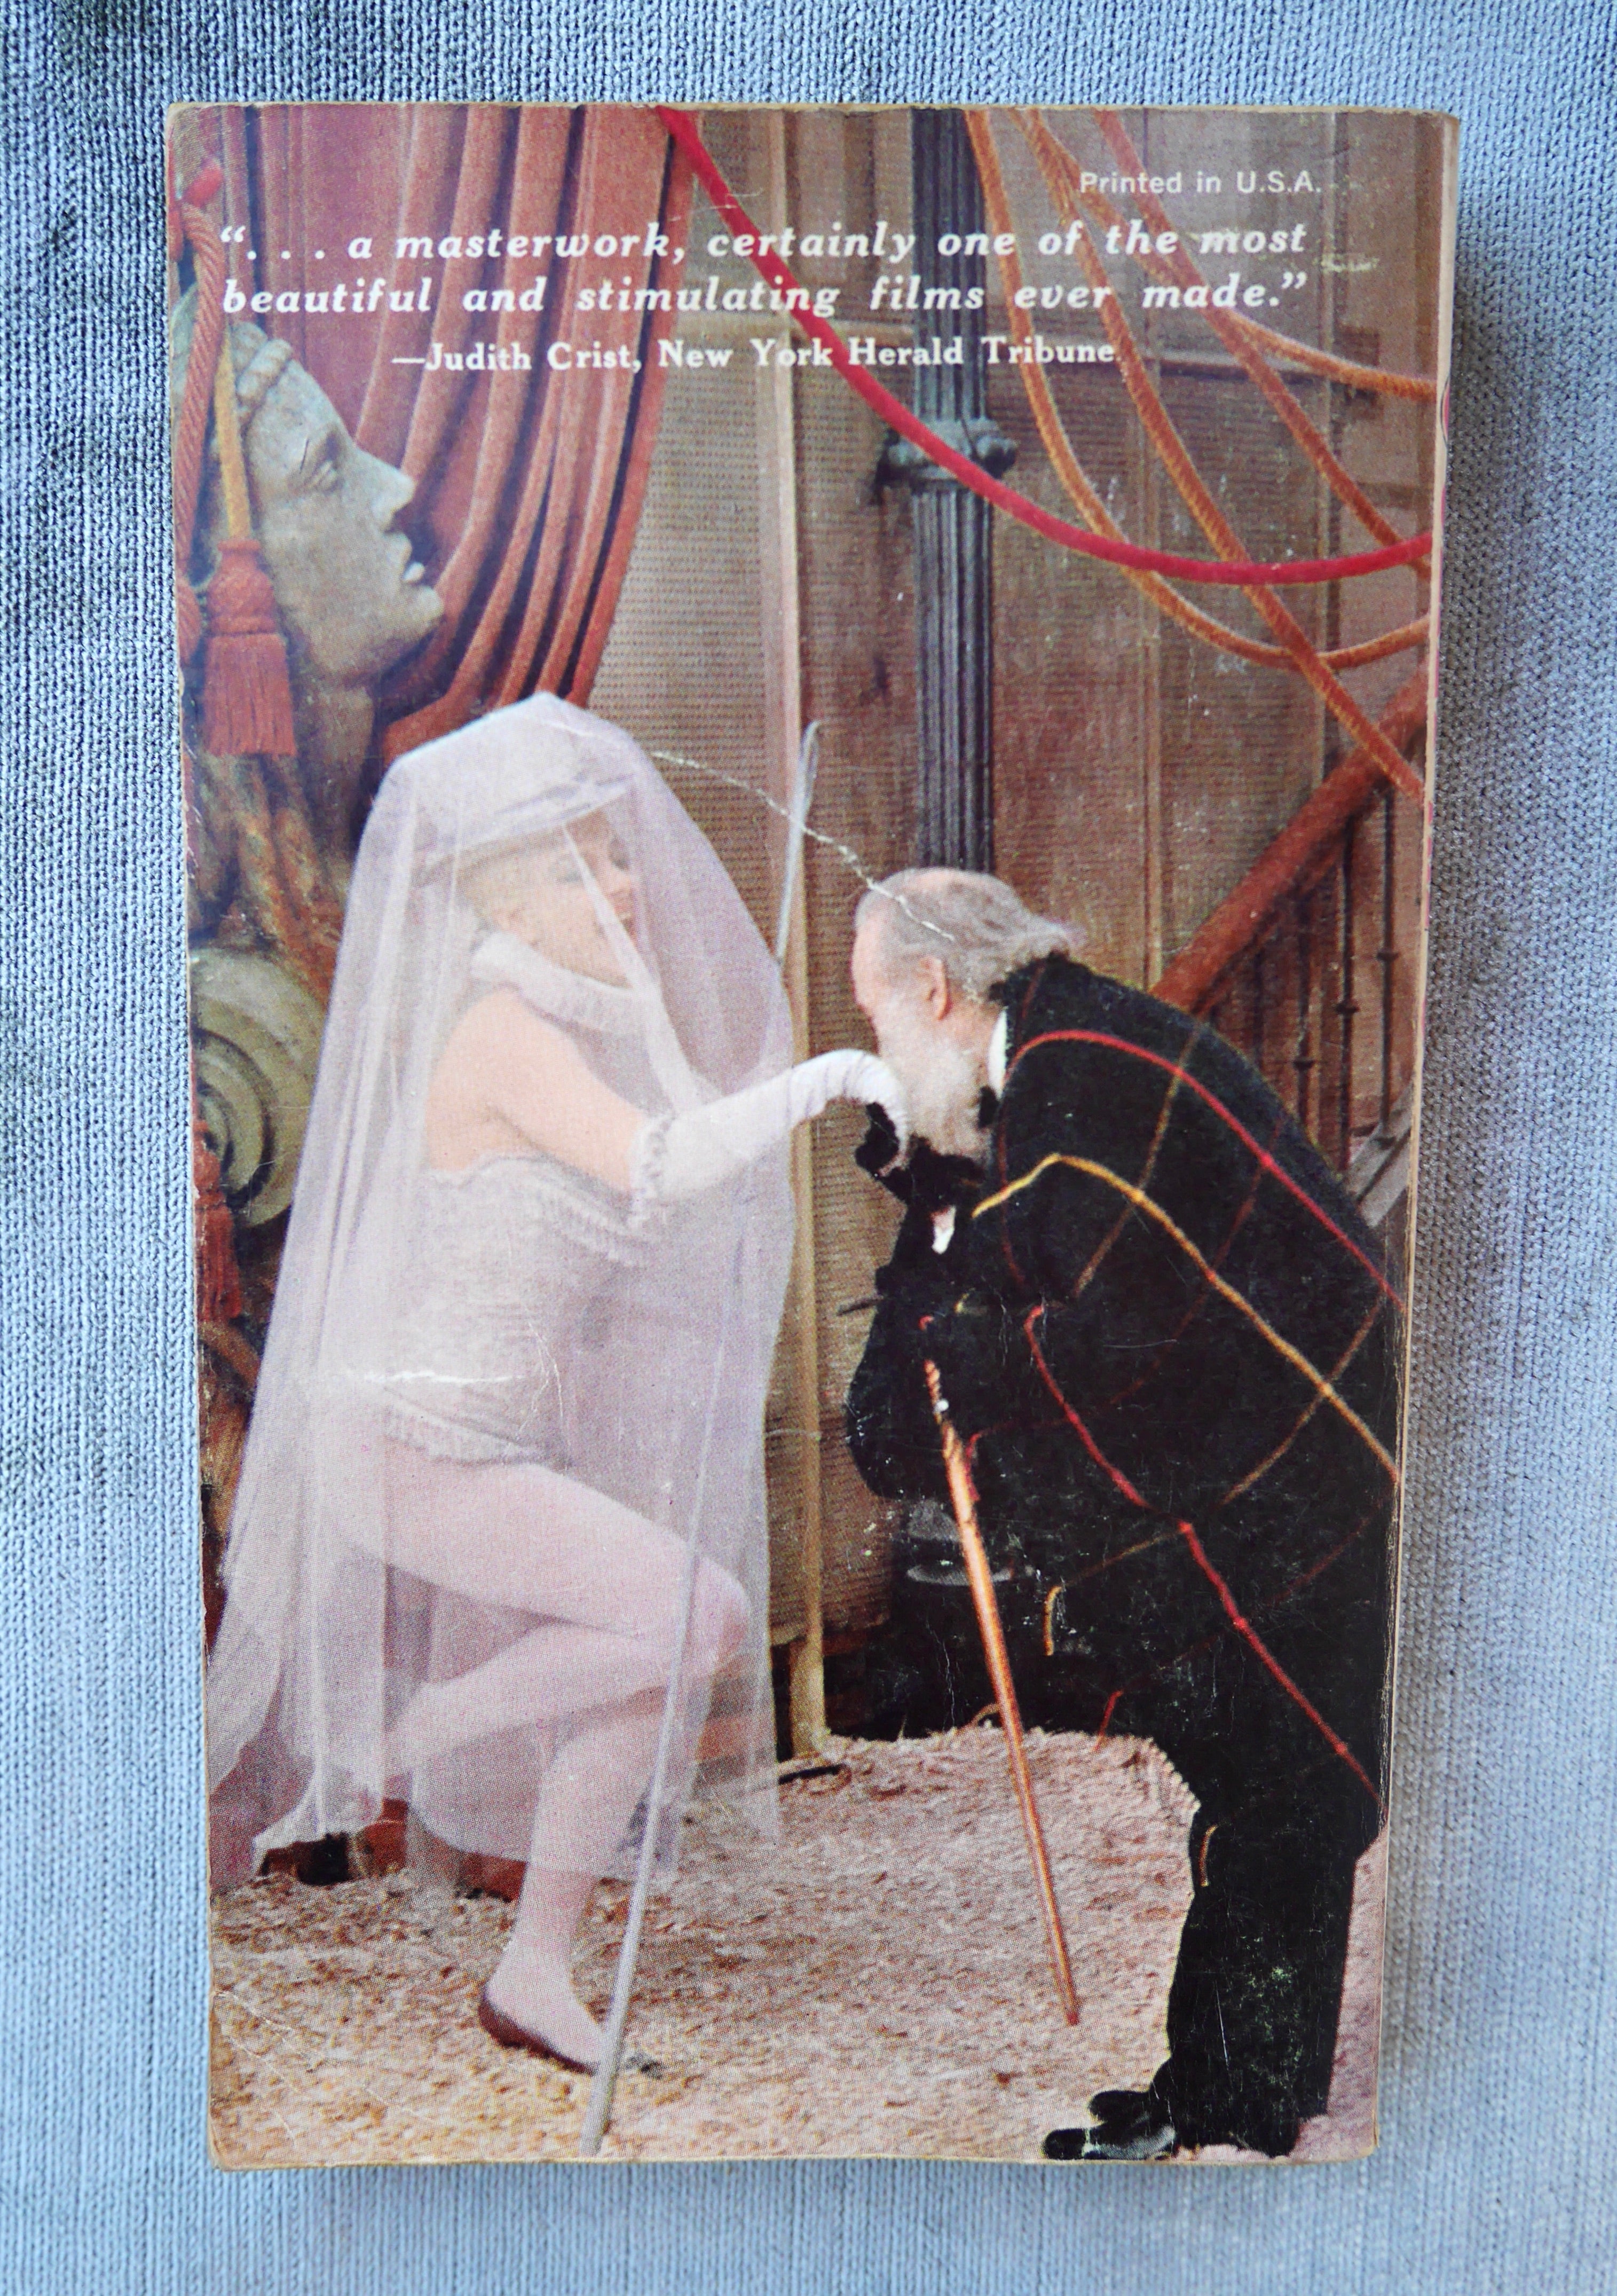 1965 Federico Felilini's Juliet of the Spirits Ballantine Books, Movie Tie-In Paperback